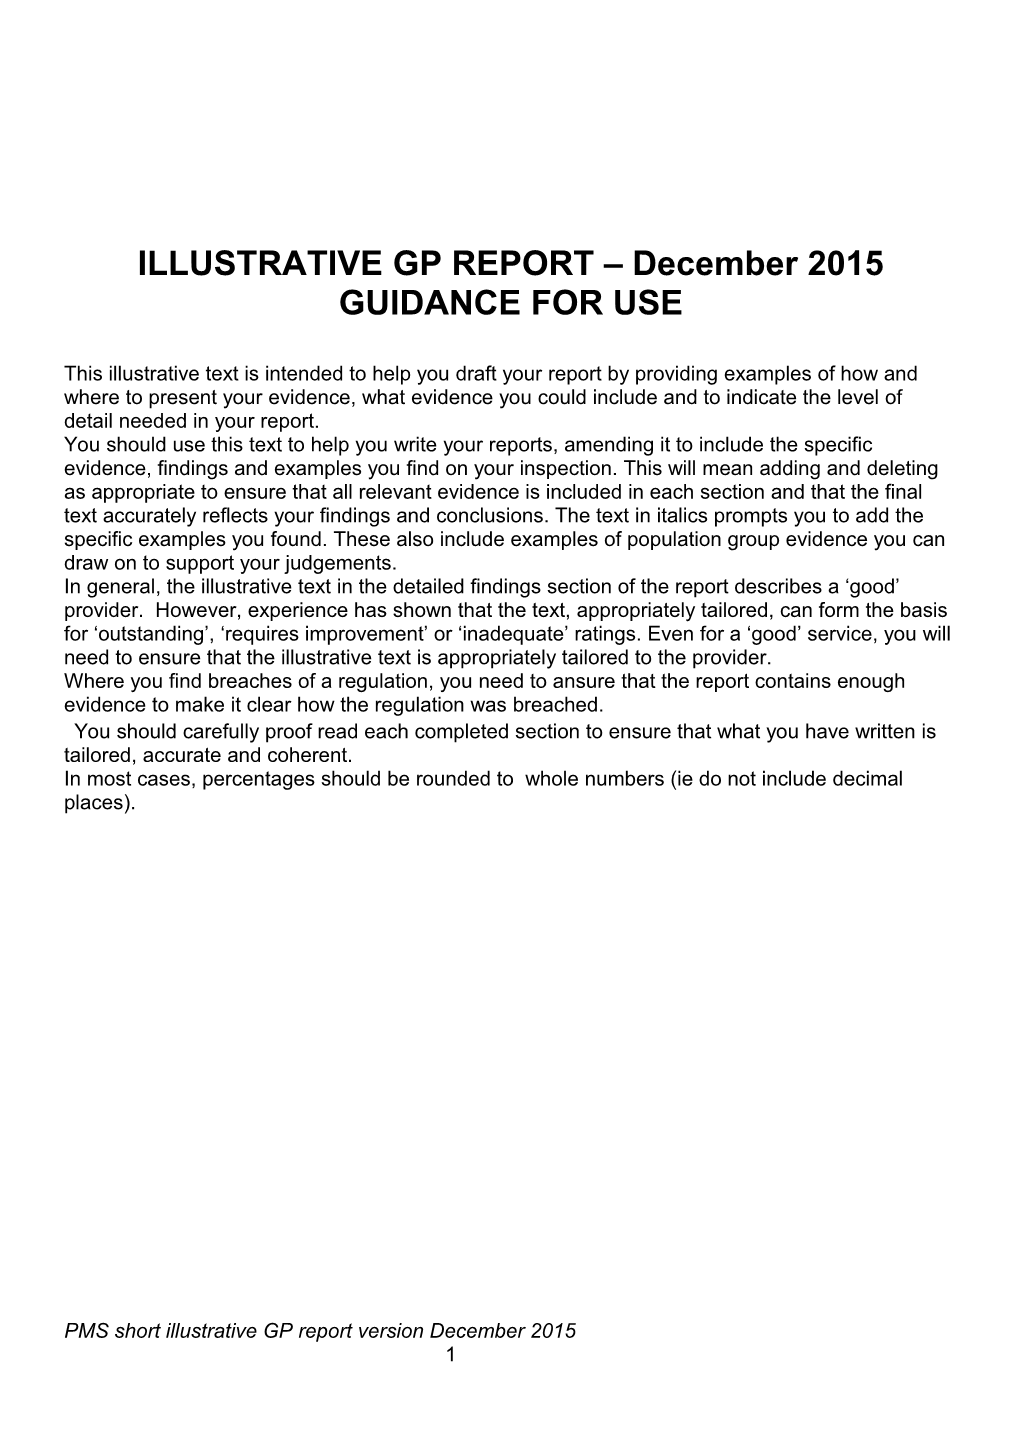 PMS Short Illustrative GP Report